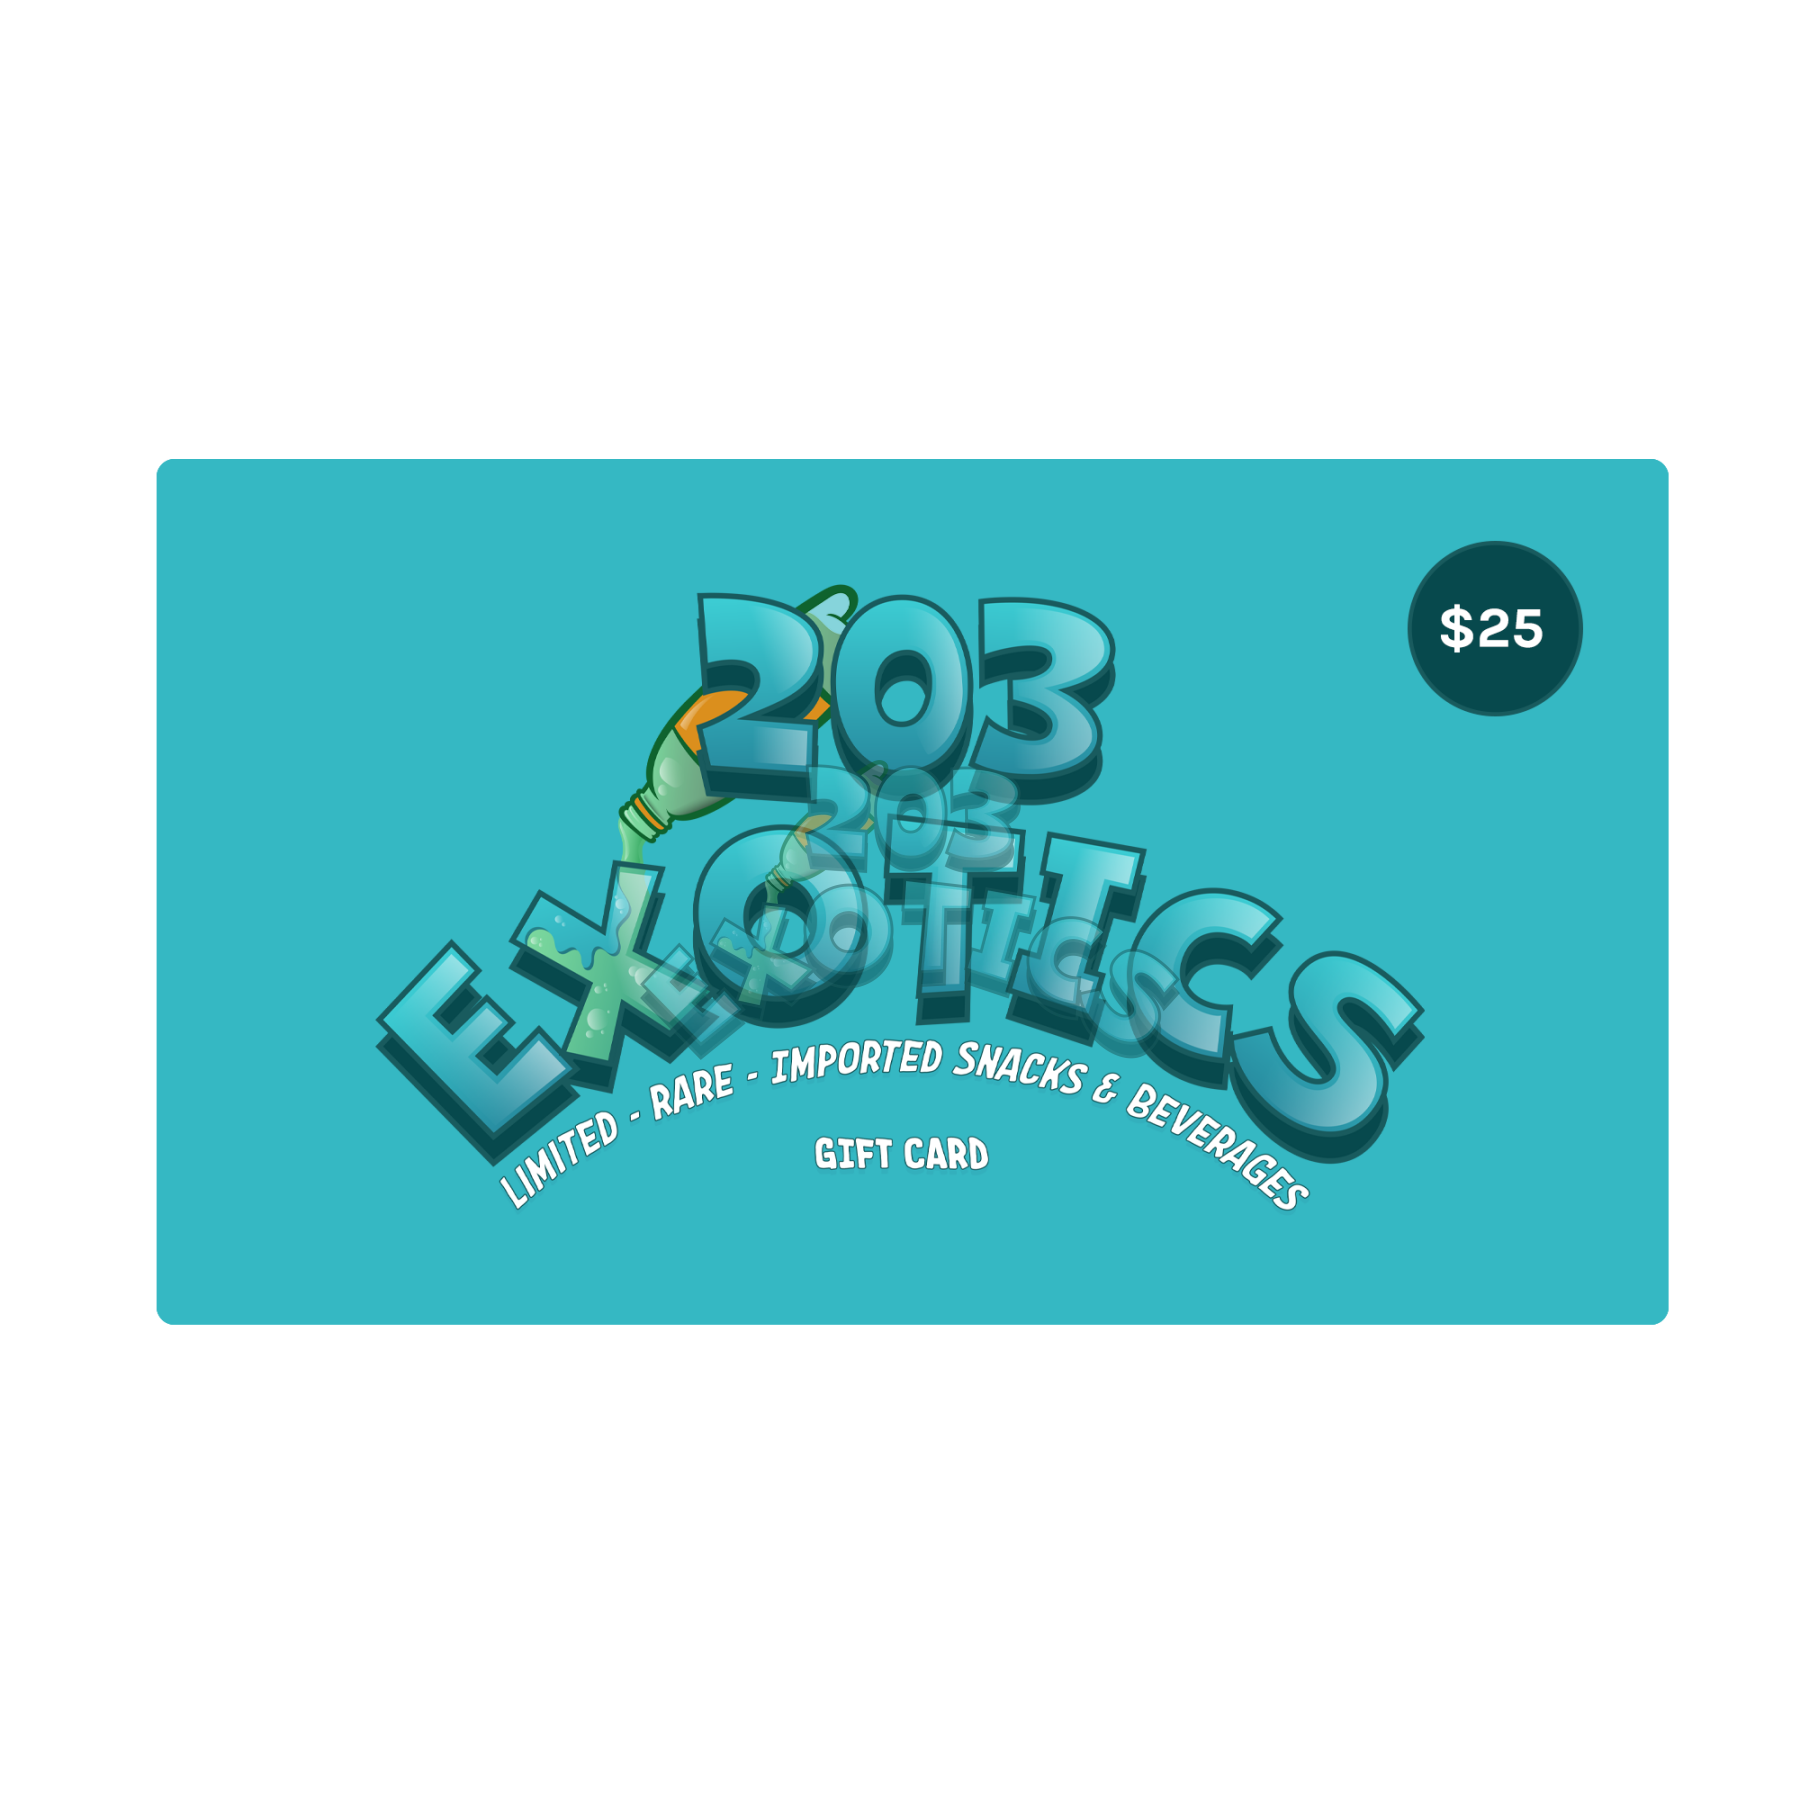 203 Exotics Gift Card $25.00